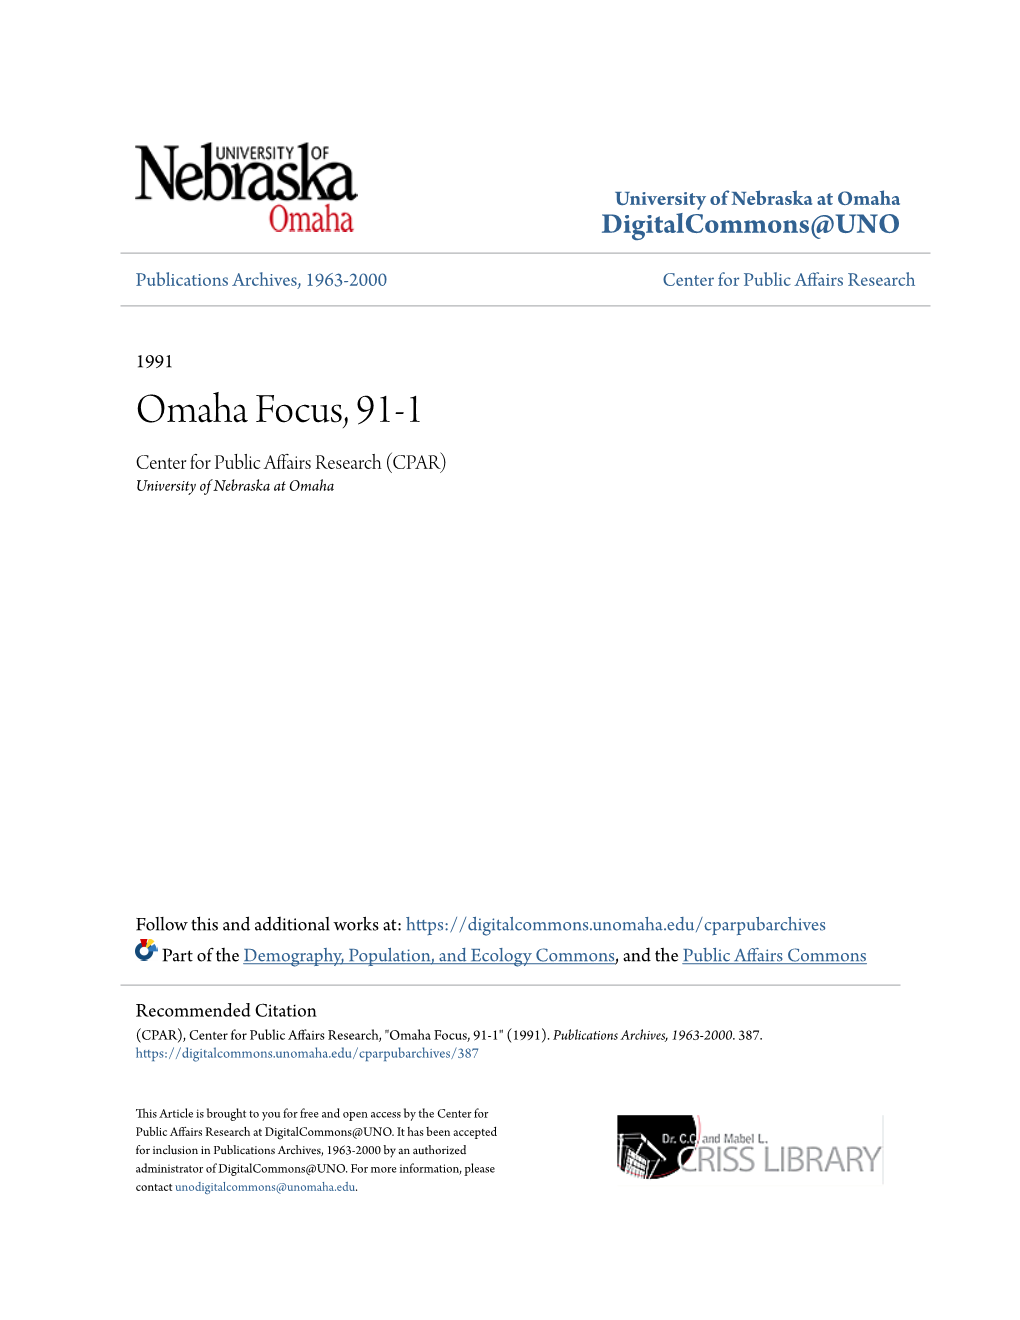 Omaha Focus, 91-1 Center for Public Affairs Research (CPAR) University of Nebraska at Omaha